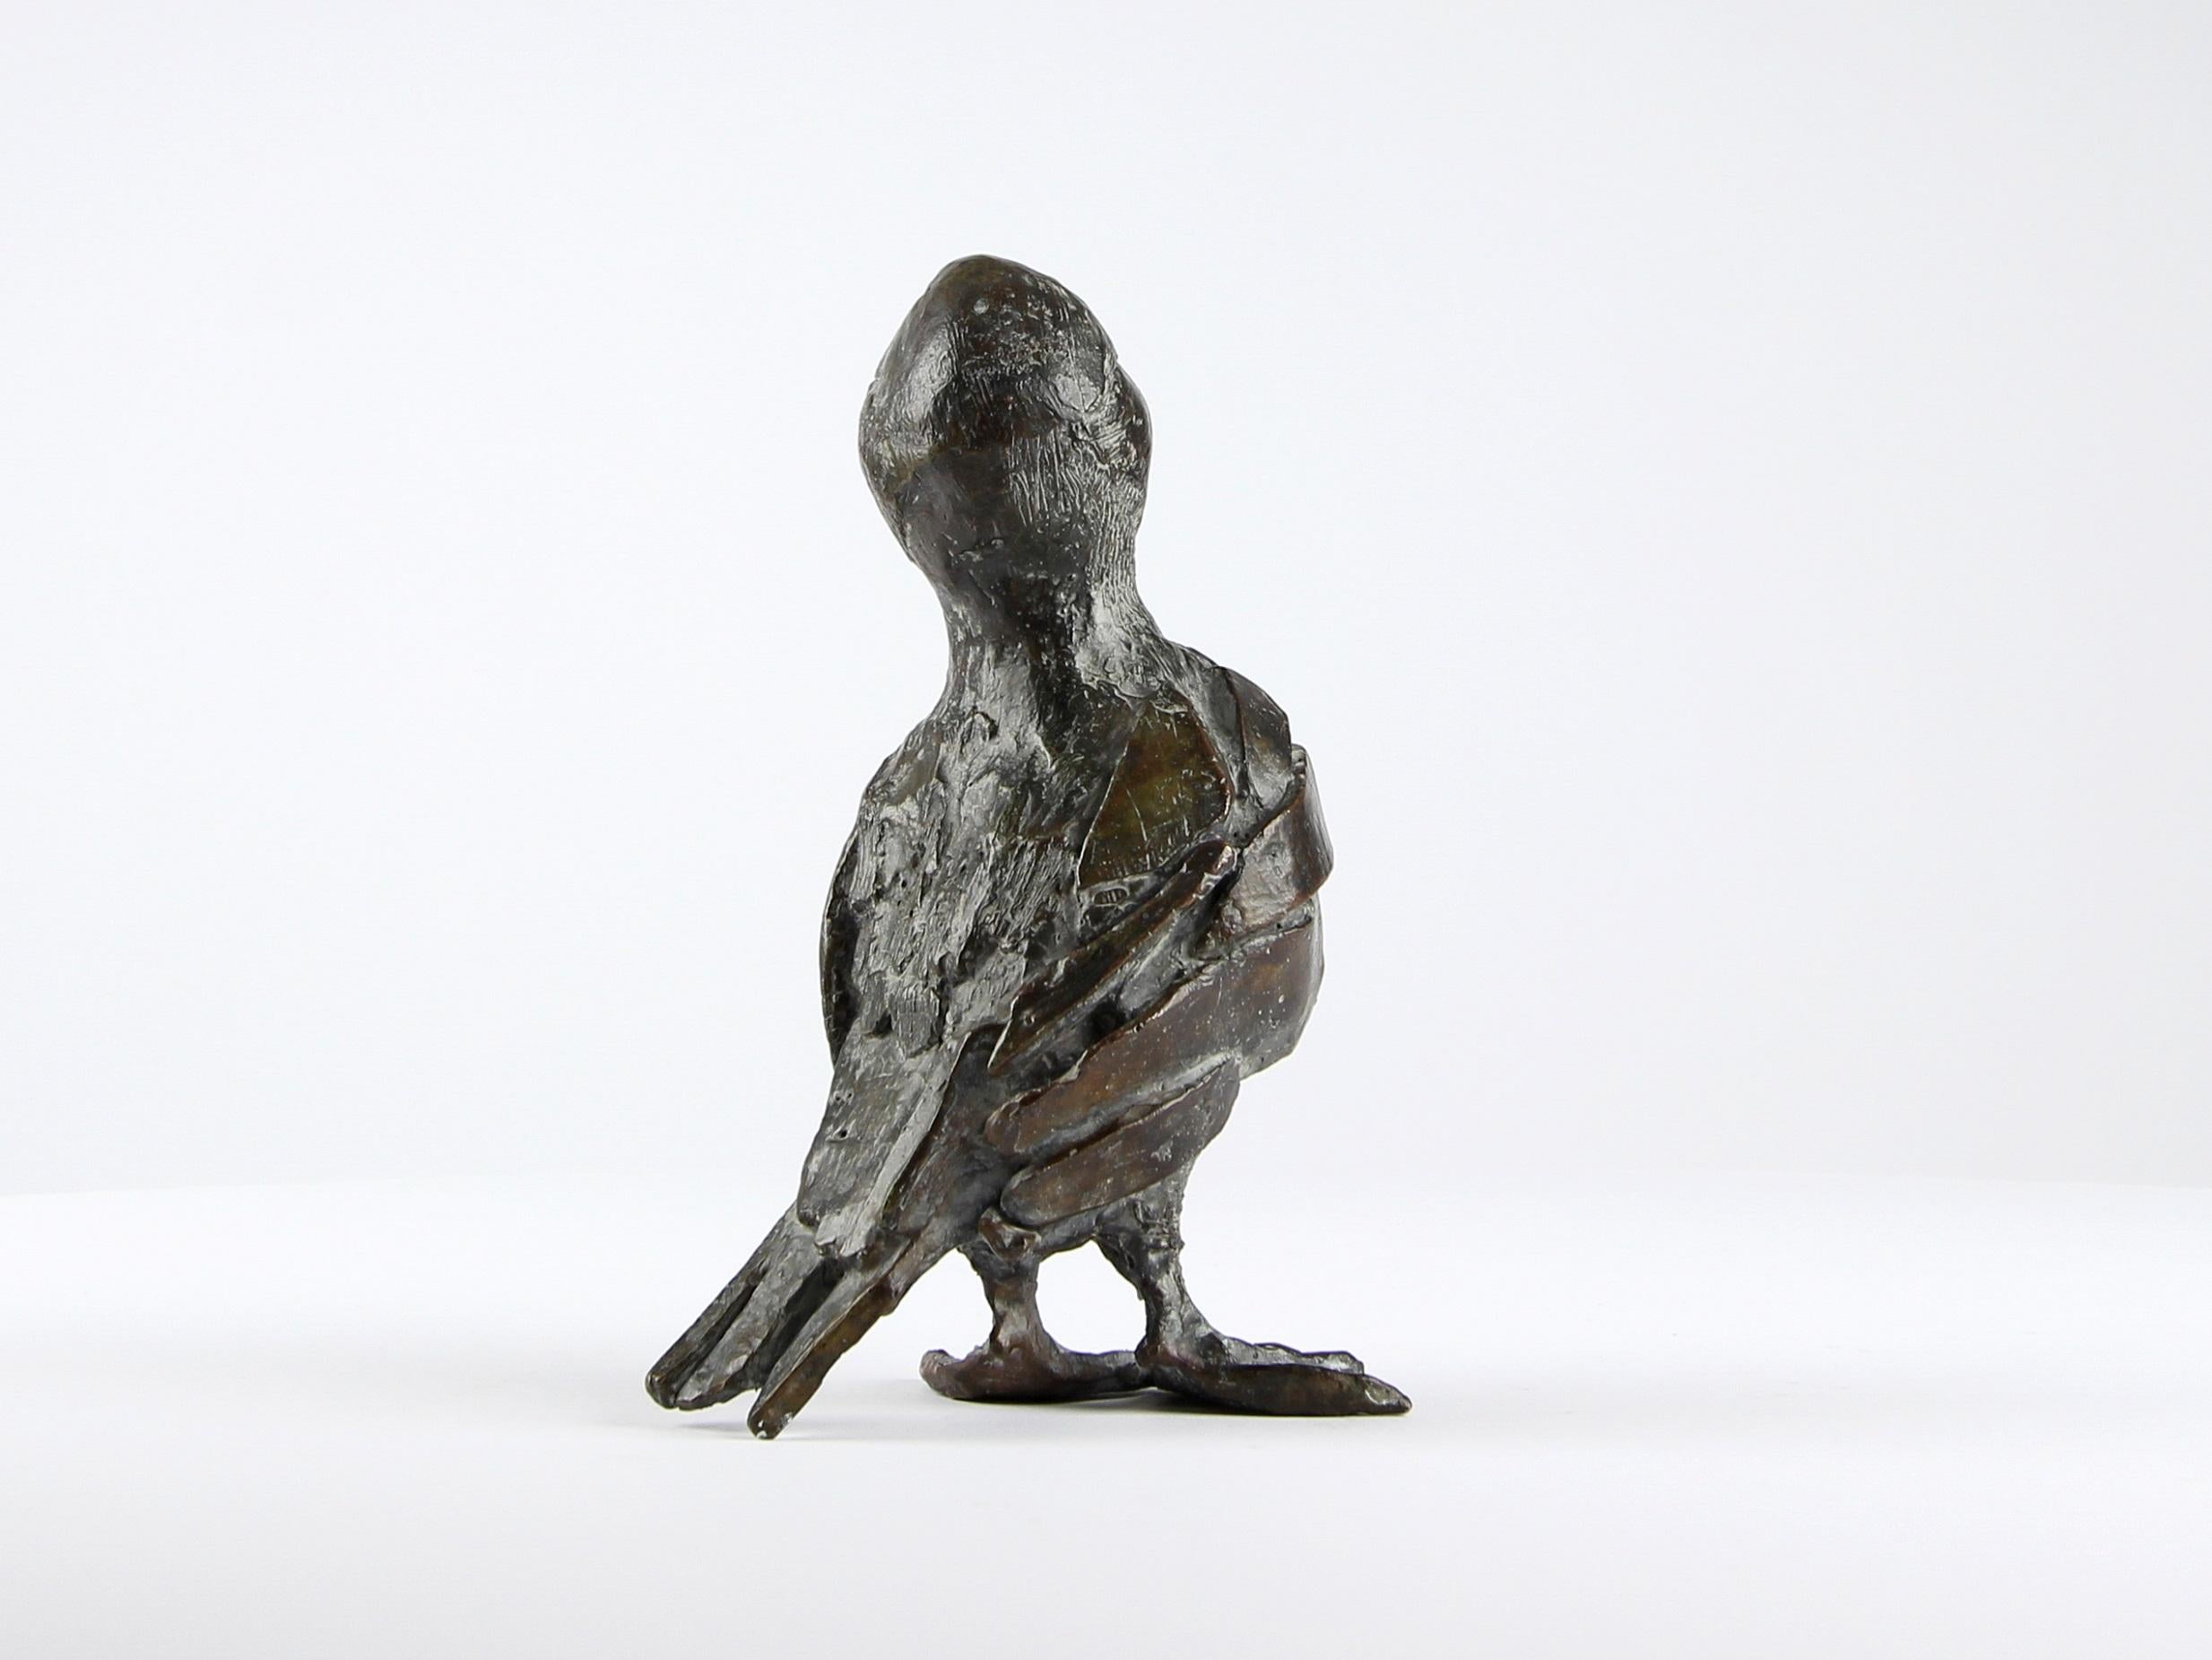 Puffin by Chésade - Bronze sculpture, animal art, expressionism, realism, bird 1